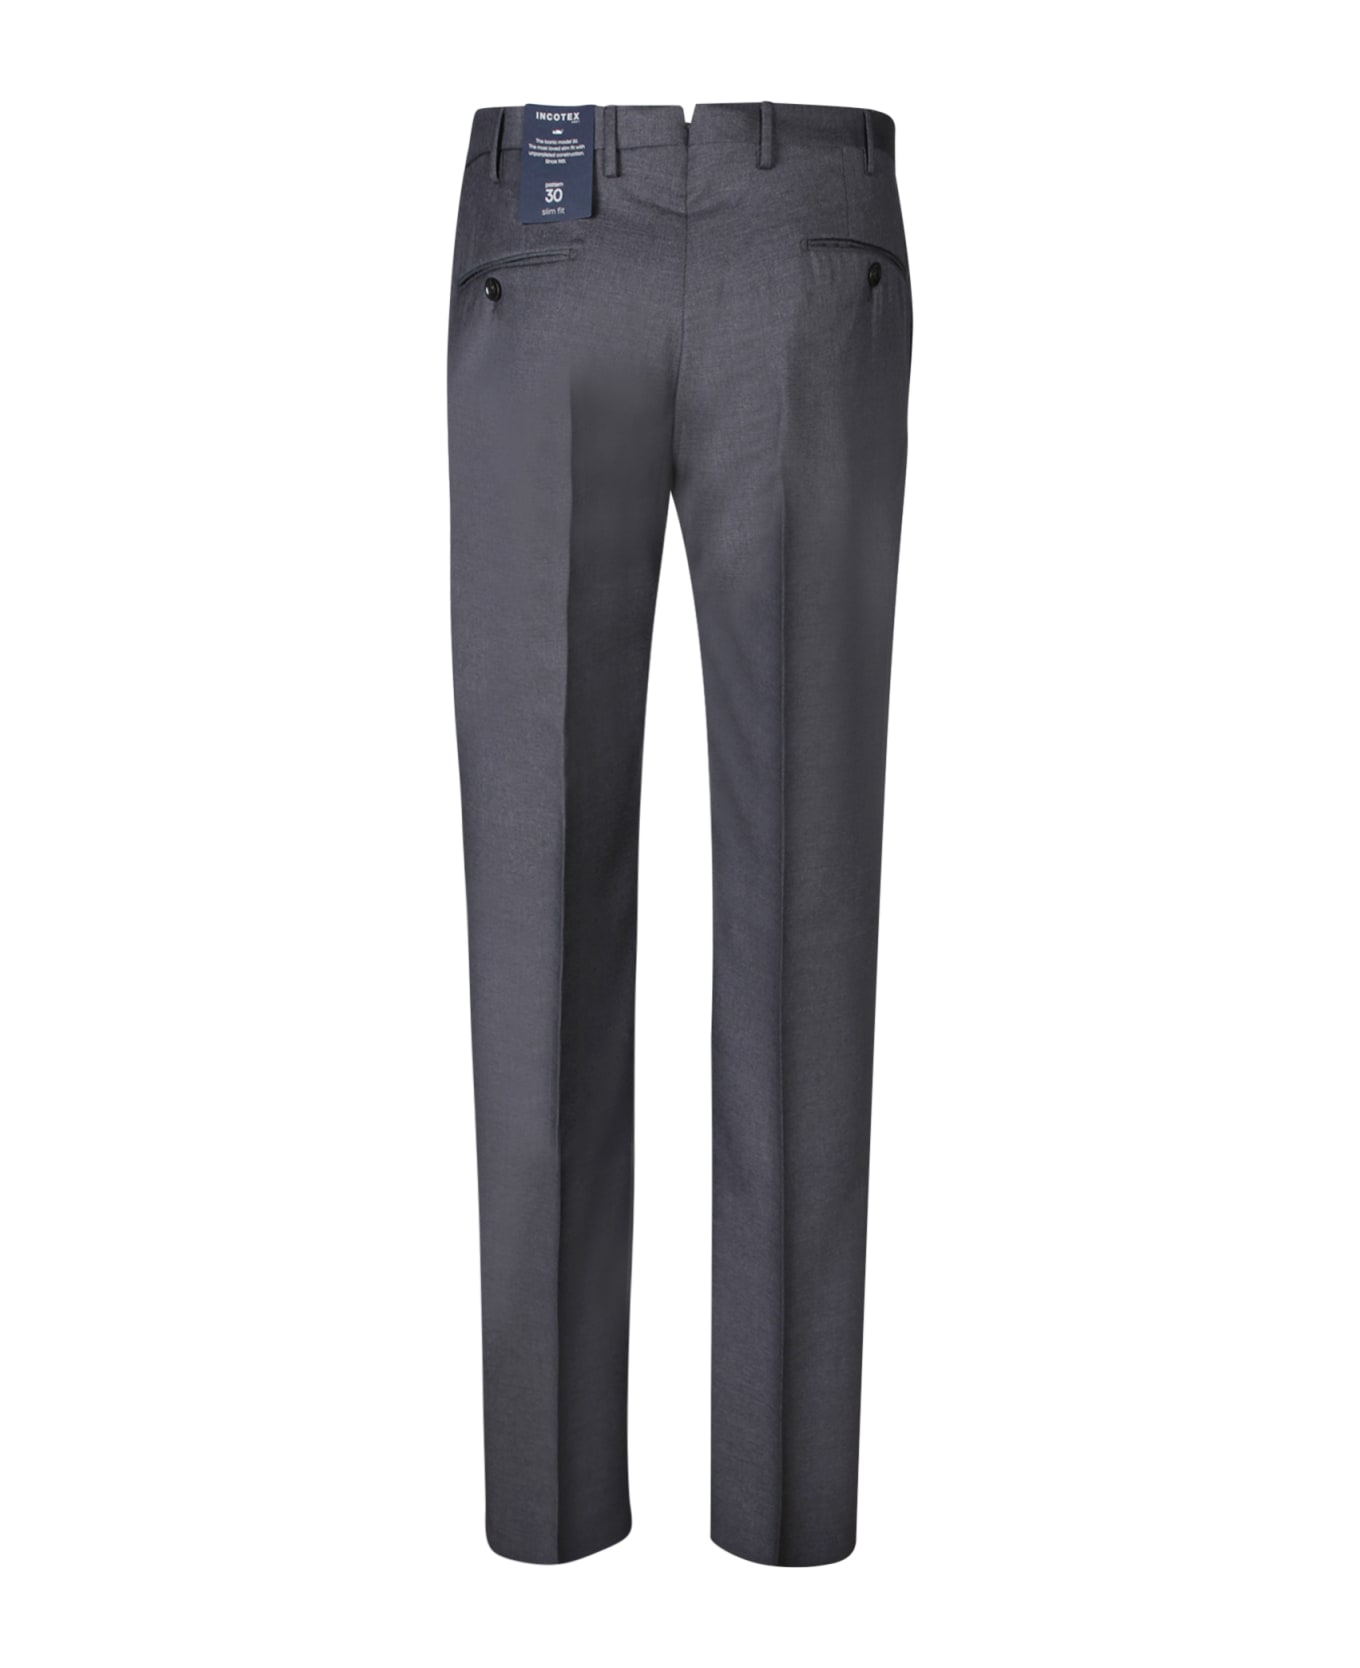 Incotex Slim Fit Gray Trousers - Grey ボトムス